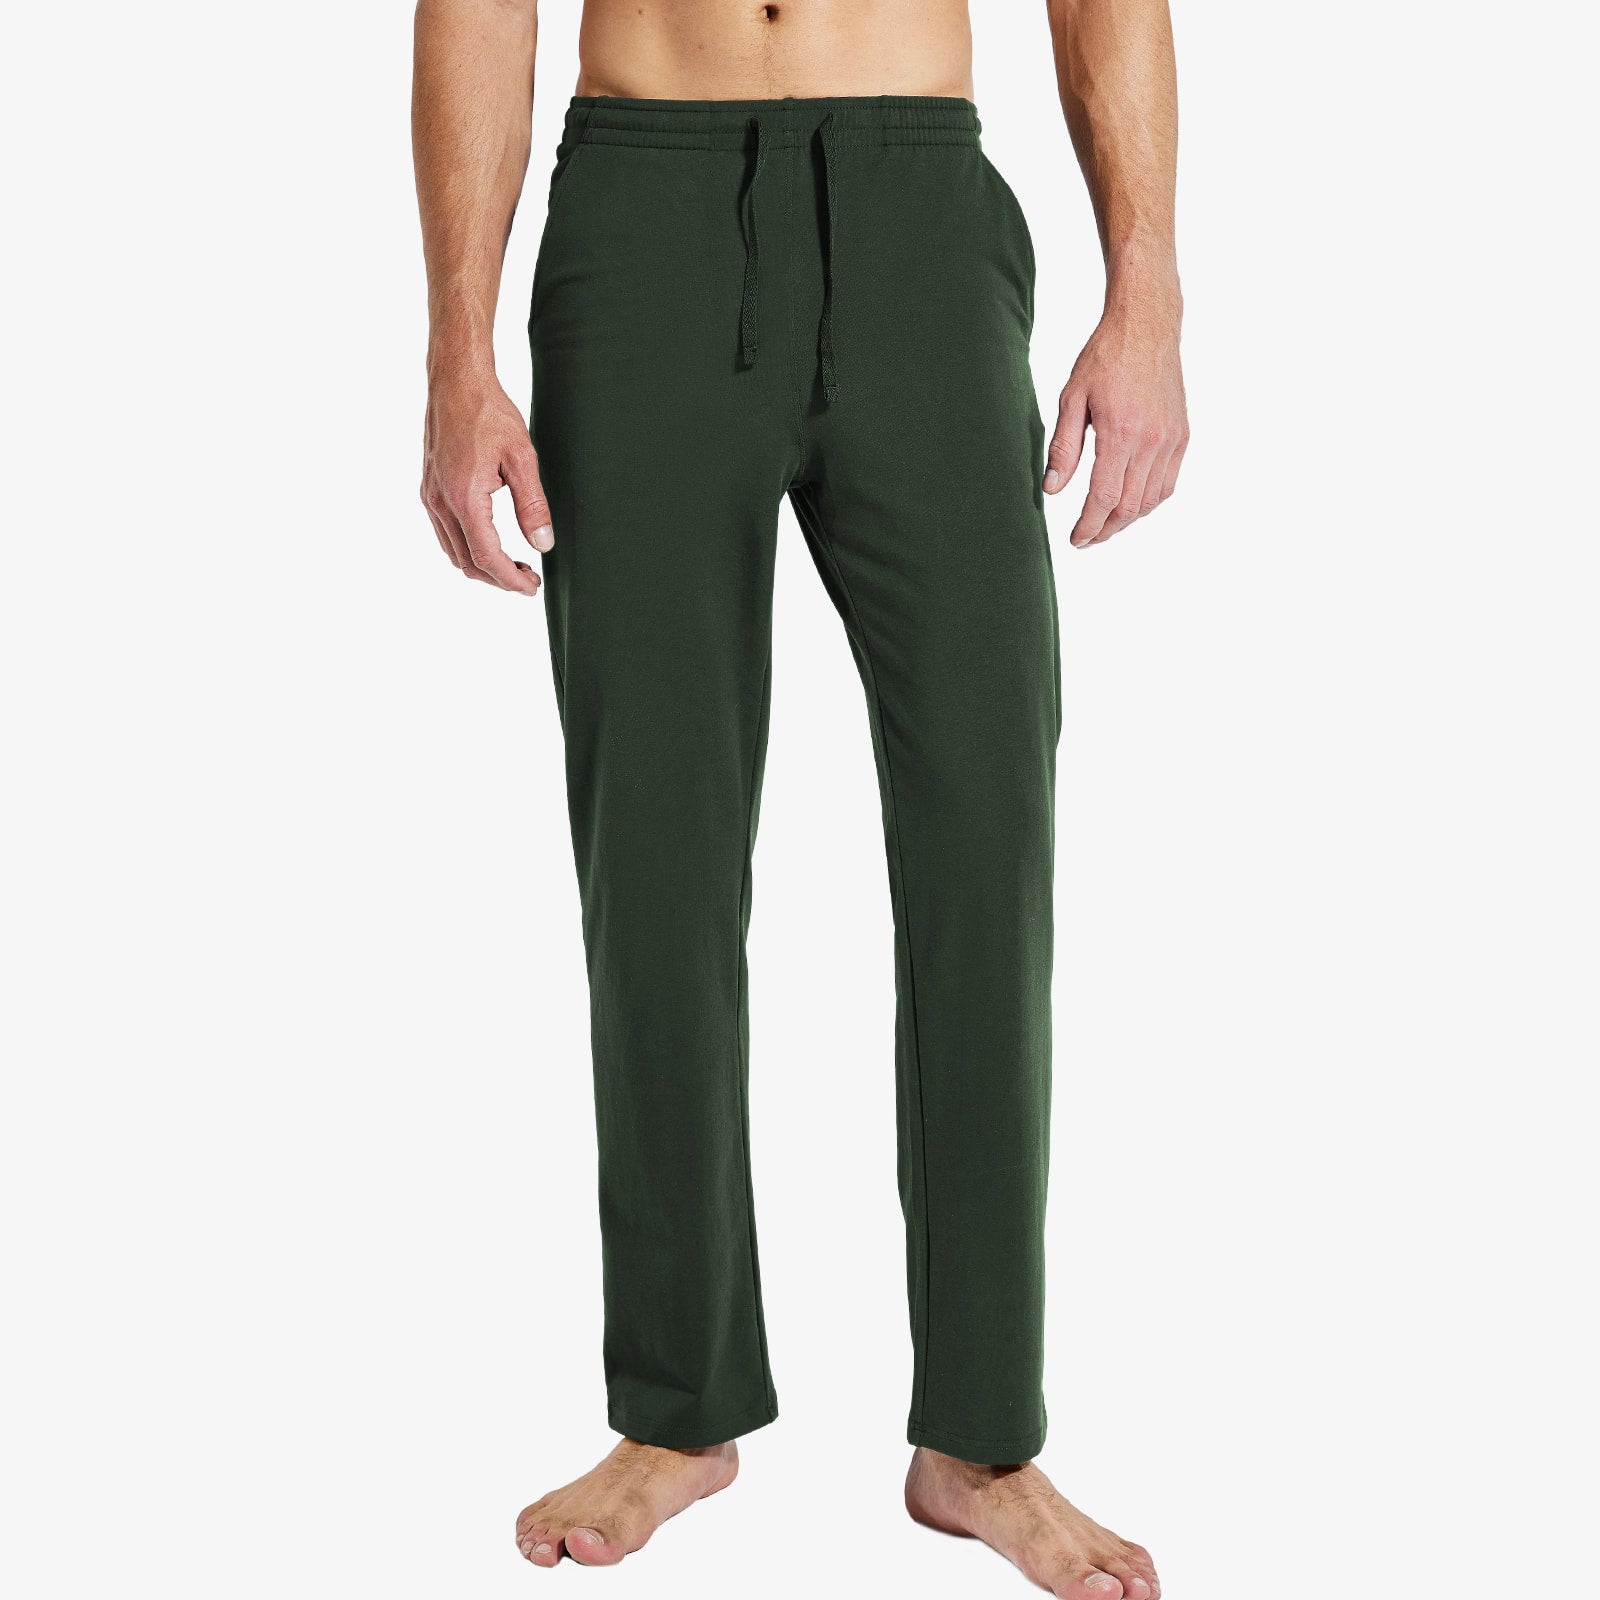 Men's Cotton Sweatpants with Pockets Lightweight Sports Knit Pants Men Train Pants Dark Green / S MIER